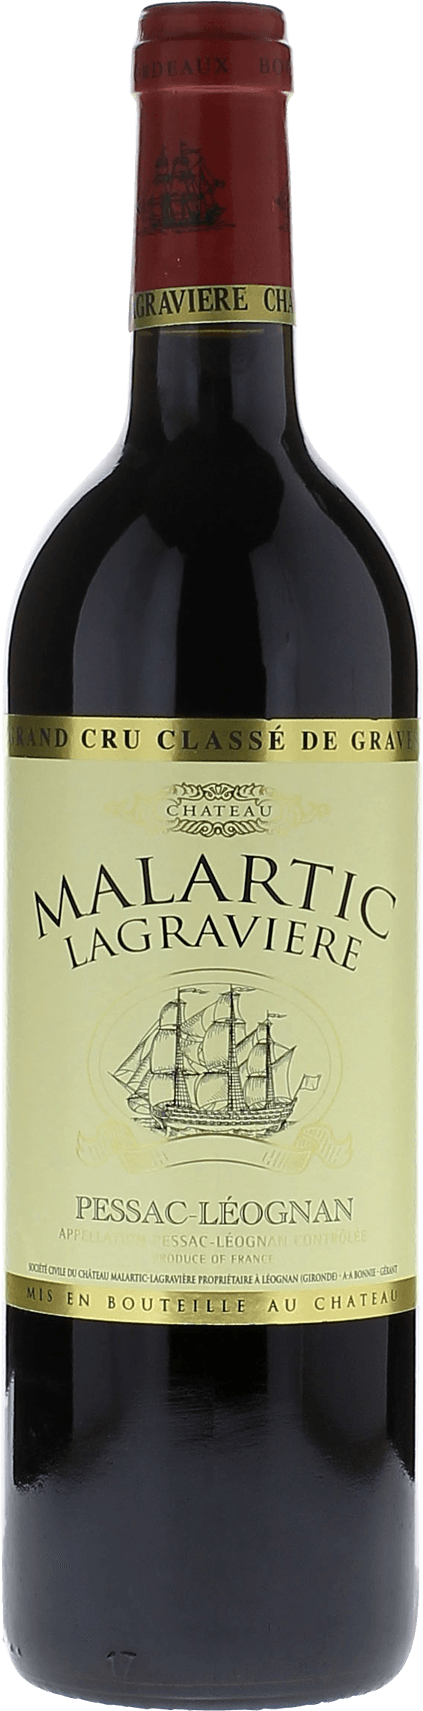 Malartic lagraviere rouge 2015 Grand Cru Class Graves, Bordeaux rouge